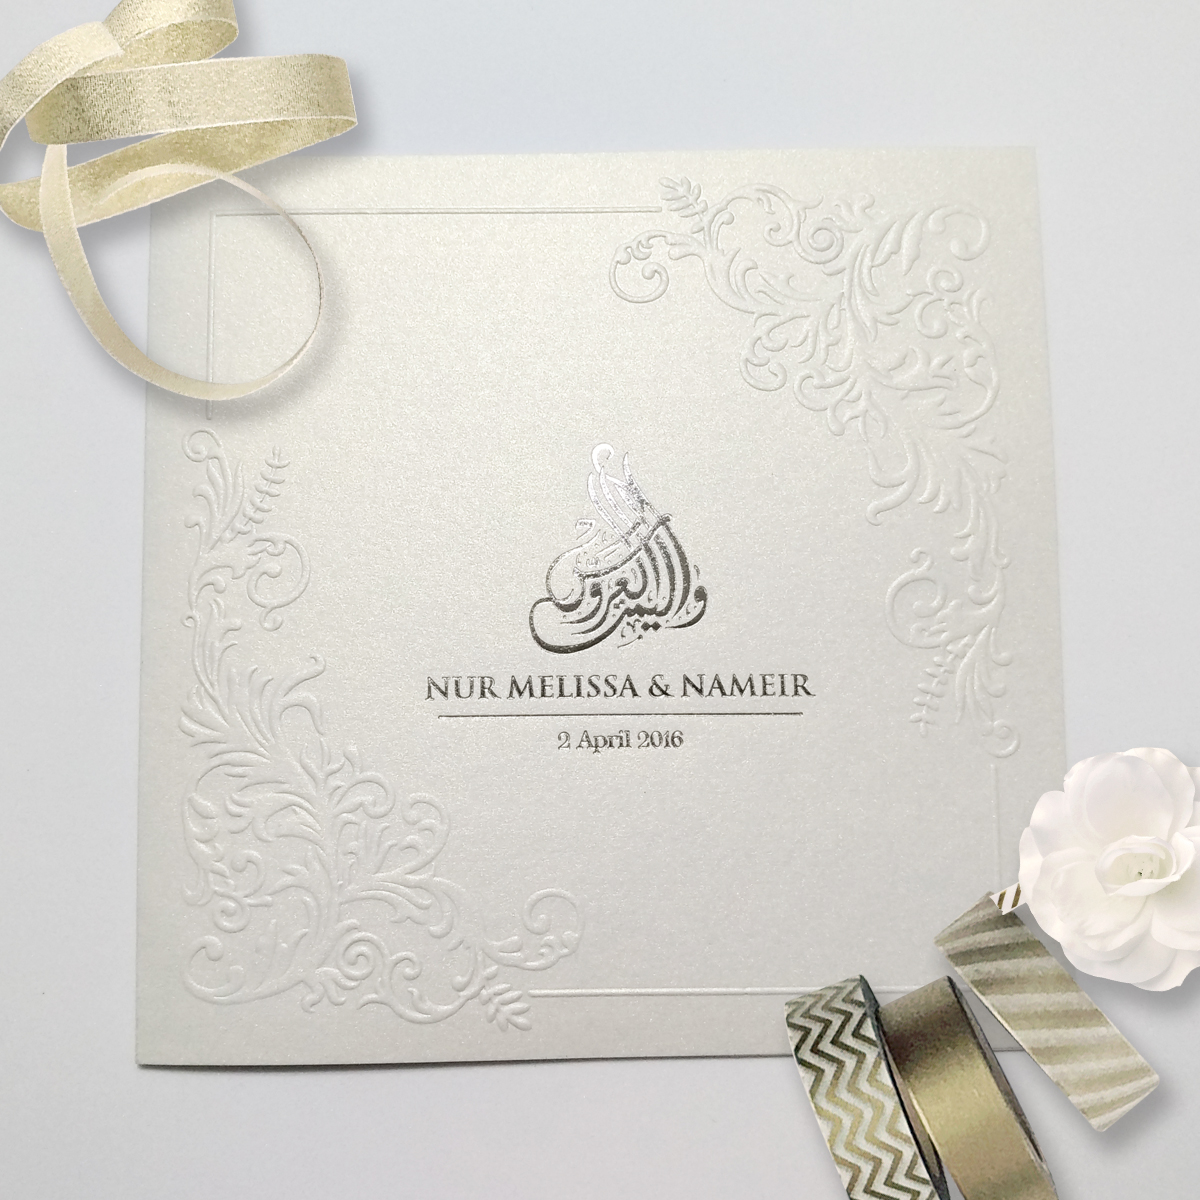 jentayu design kad kahwin royal series vip metallic white hot stamping silver inlay or print on card wedding cards malaysia 